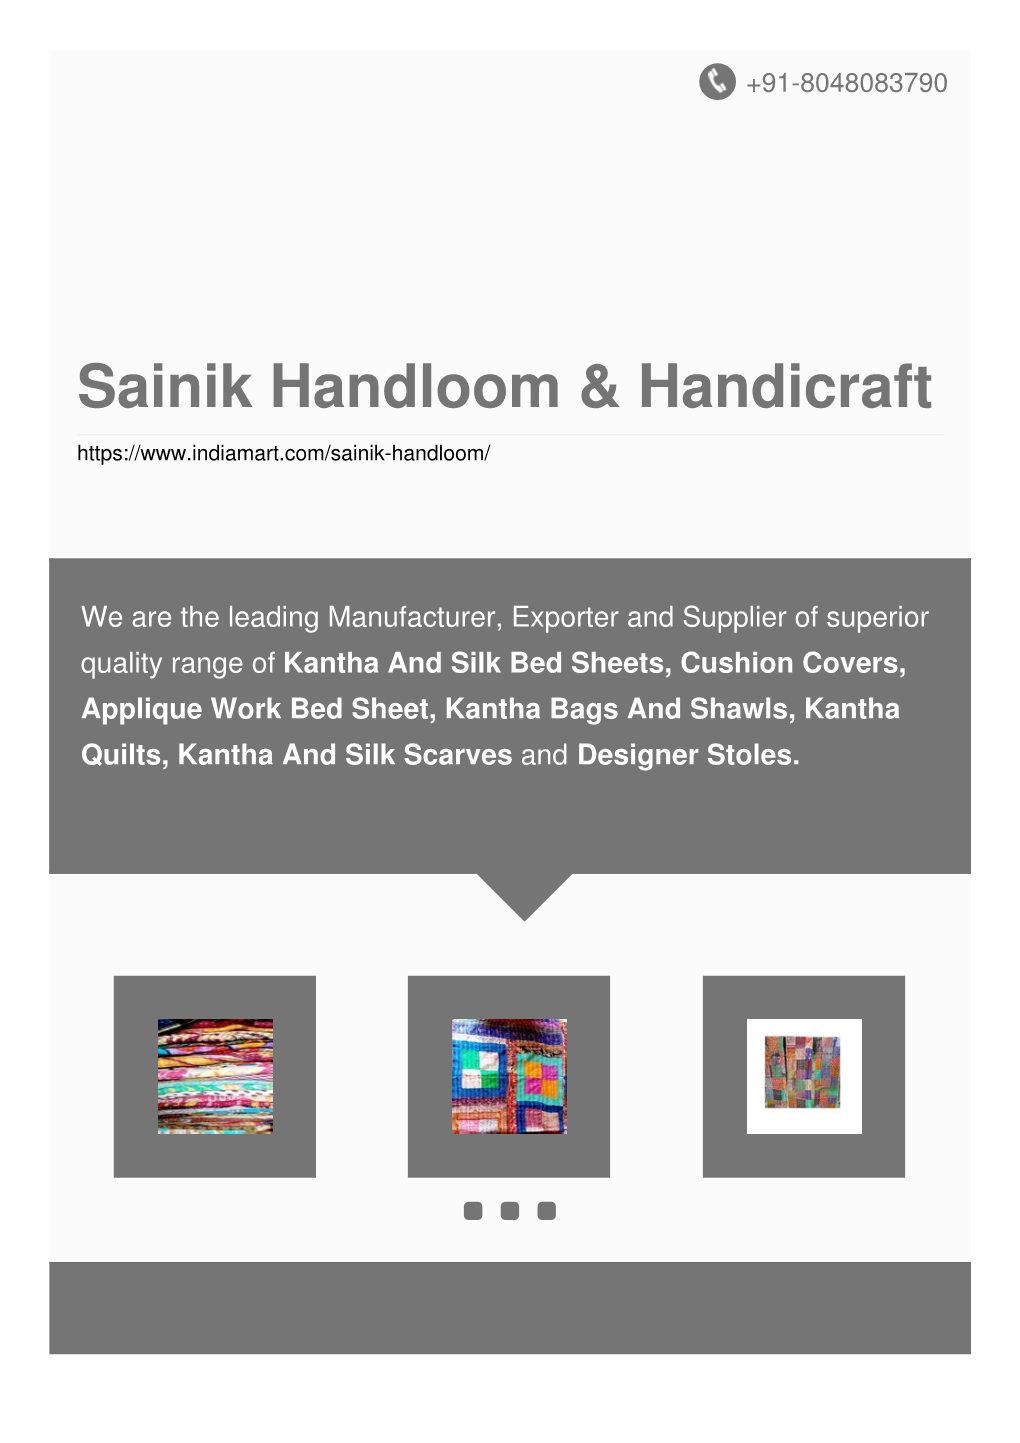 Sainik Handloom & Handicraft